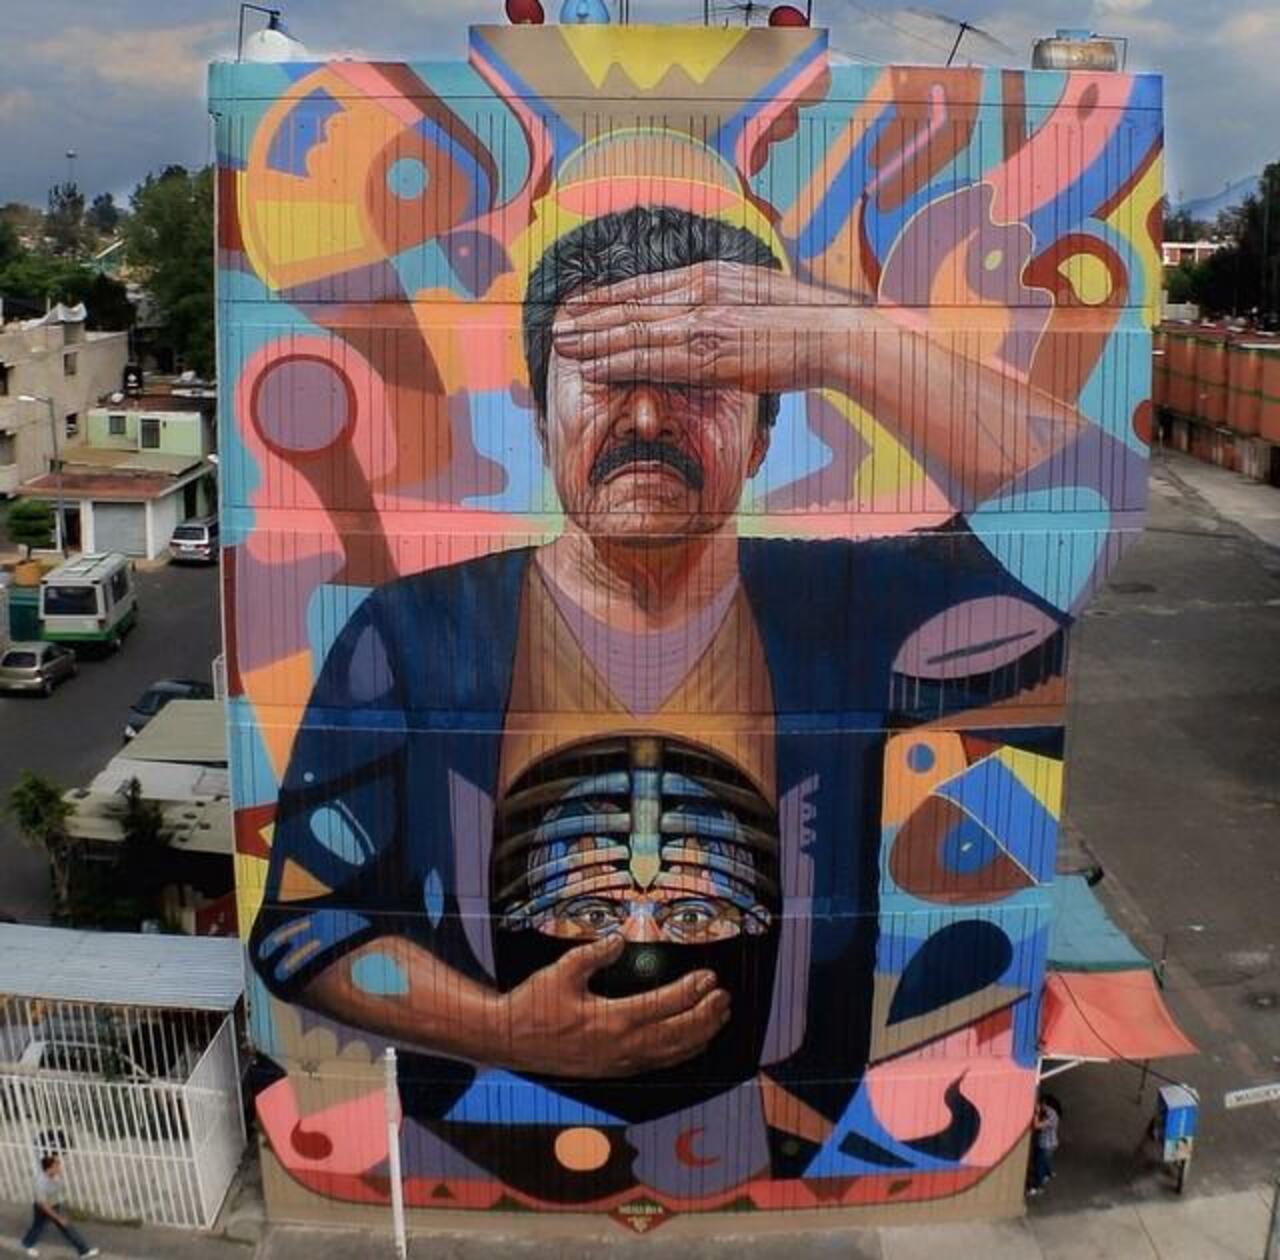 Large scale Street Art by the artist Daniel Cortez 

#art #mural #graffiti #streetart http://t.co/pgHVuGhQ1C